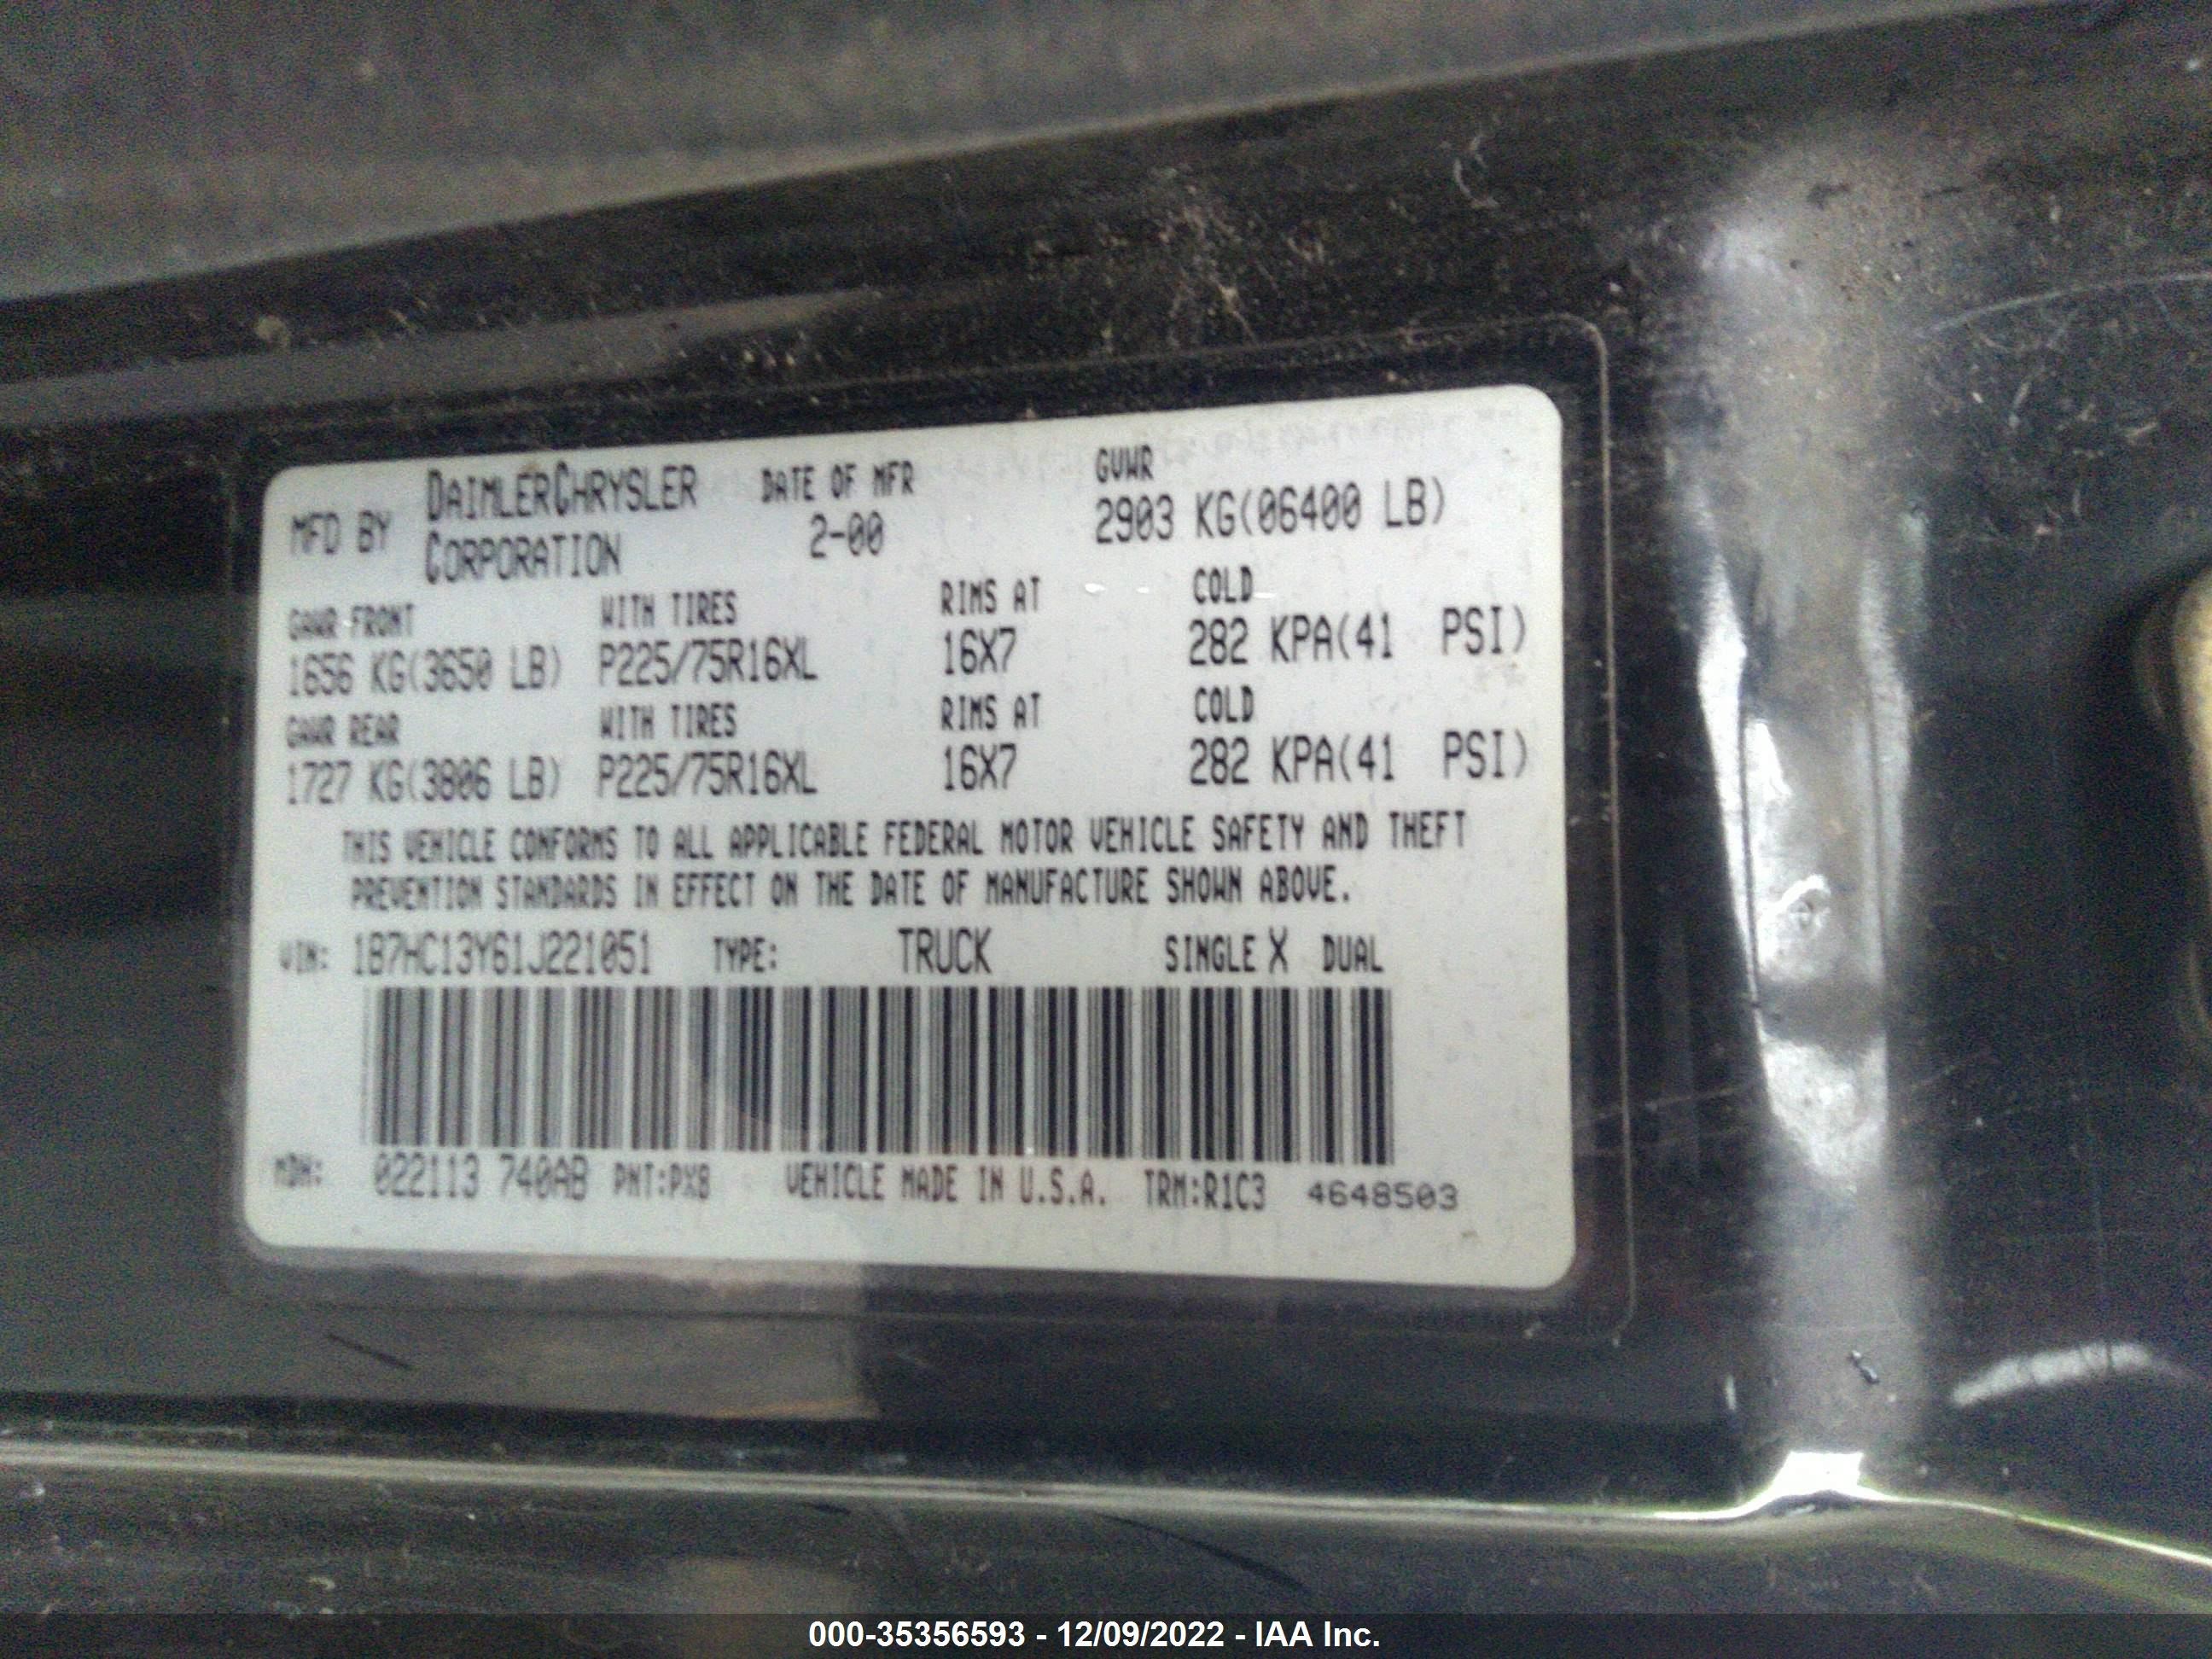 2001 DODGE RAM 1500 VIN: 1B7HC13Y61J221051